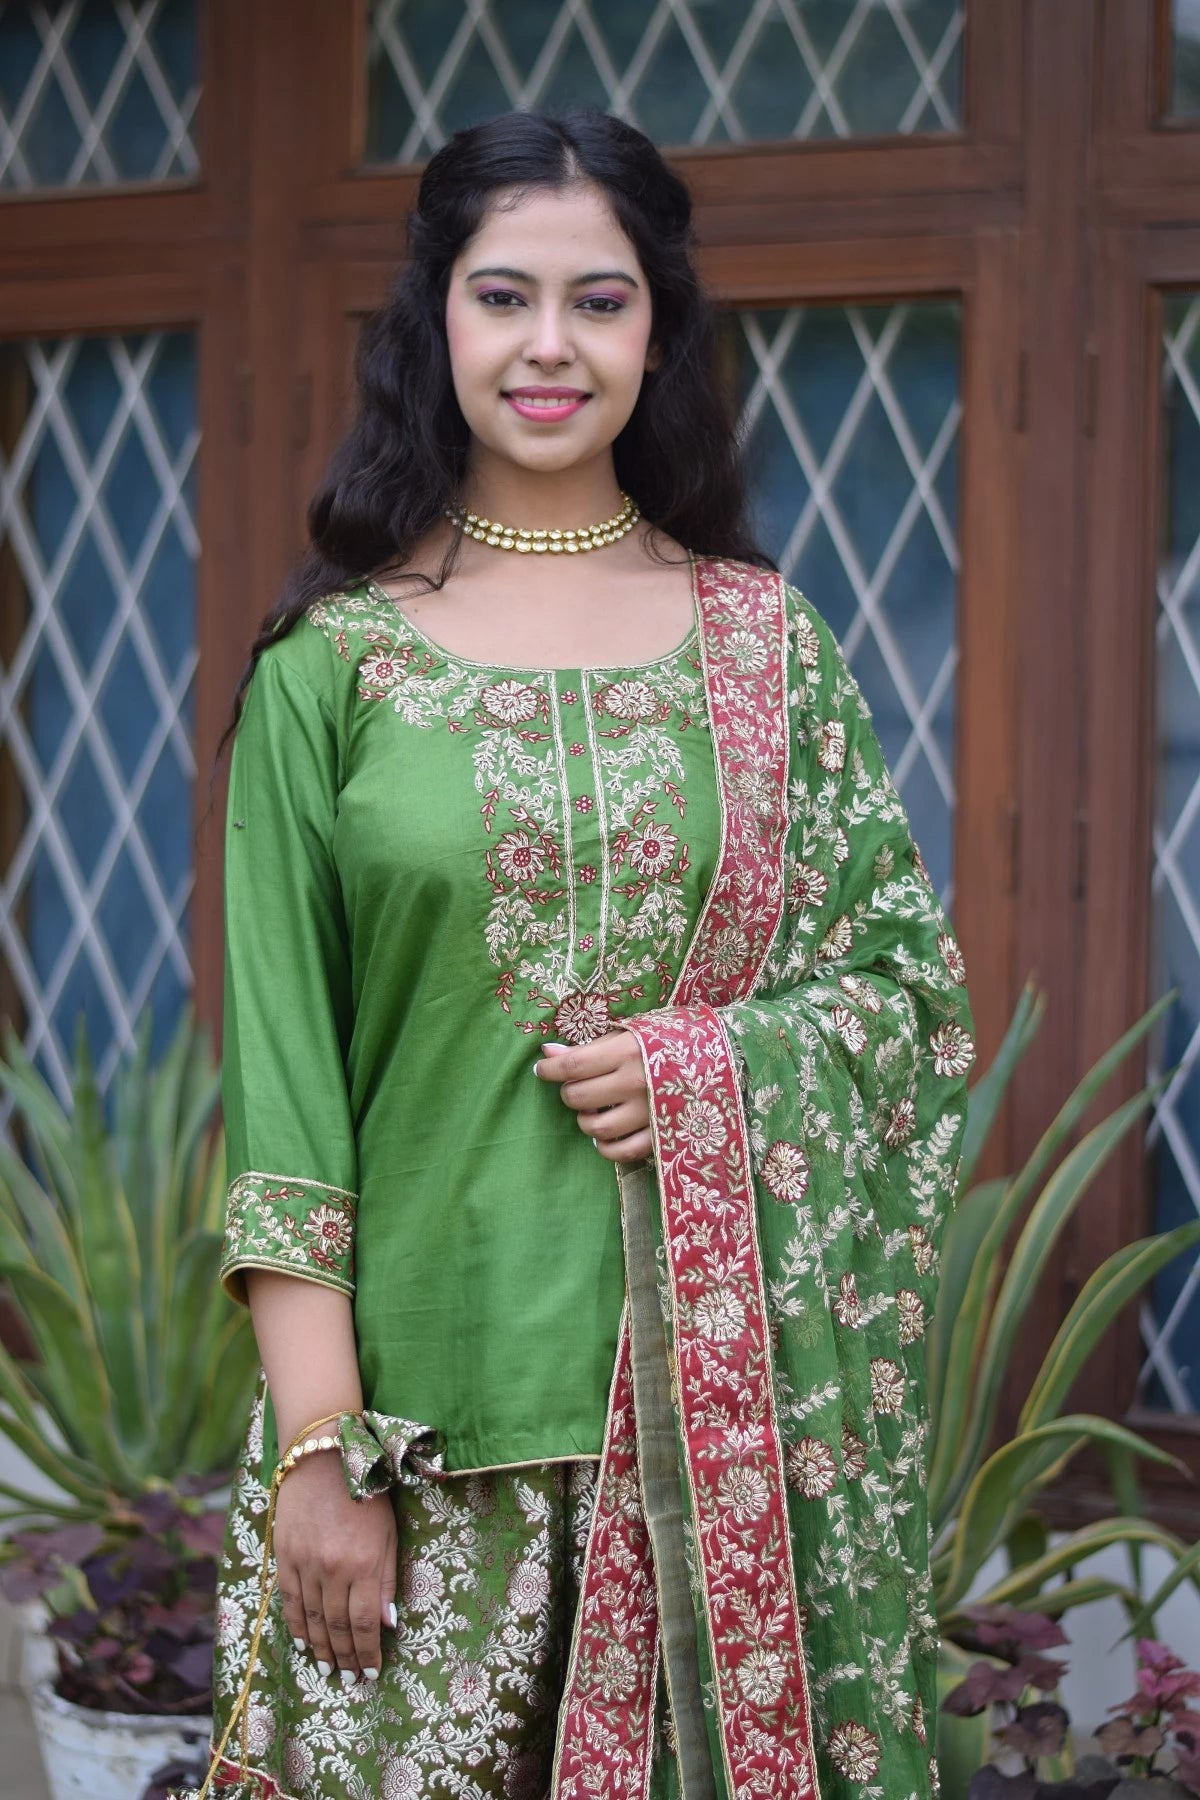 A striking green silk and kamkhab zardozi embroidered gharara suit worn for an Indian wedding.